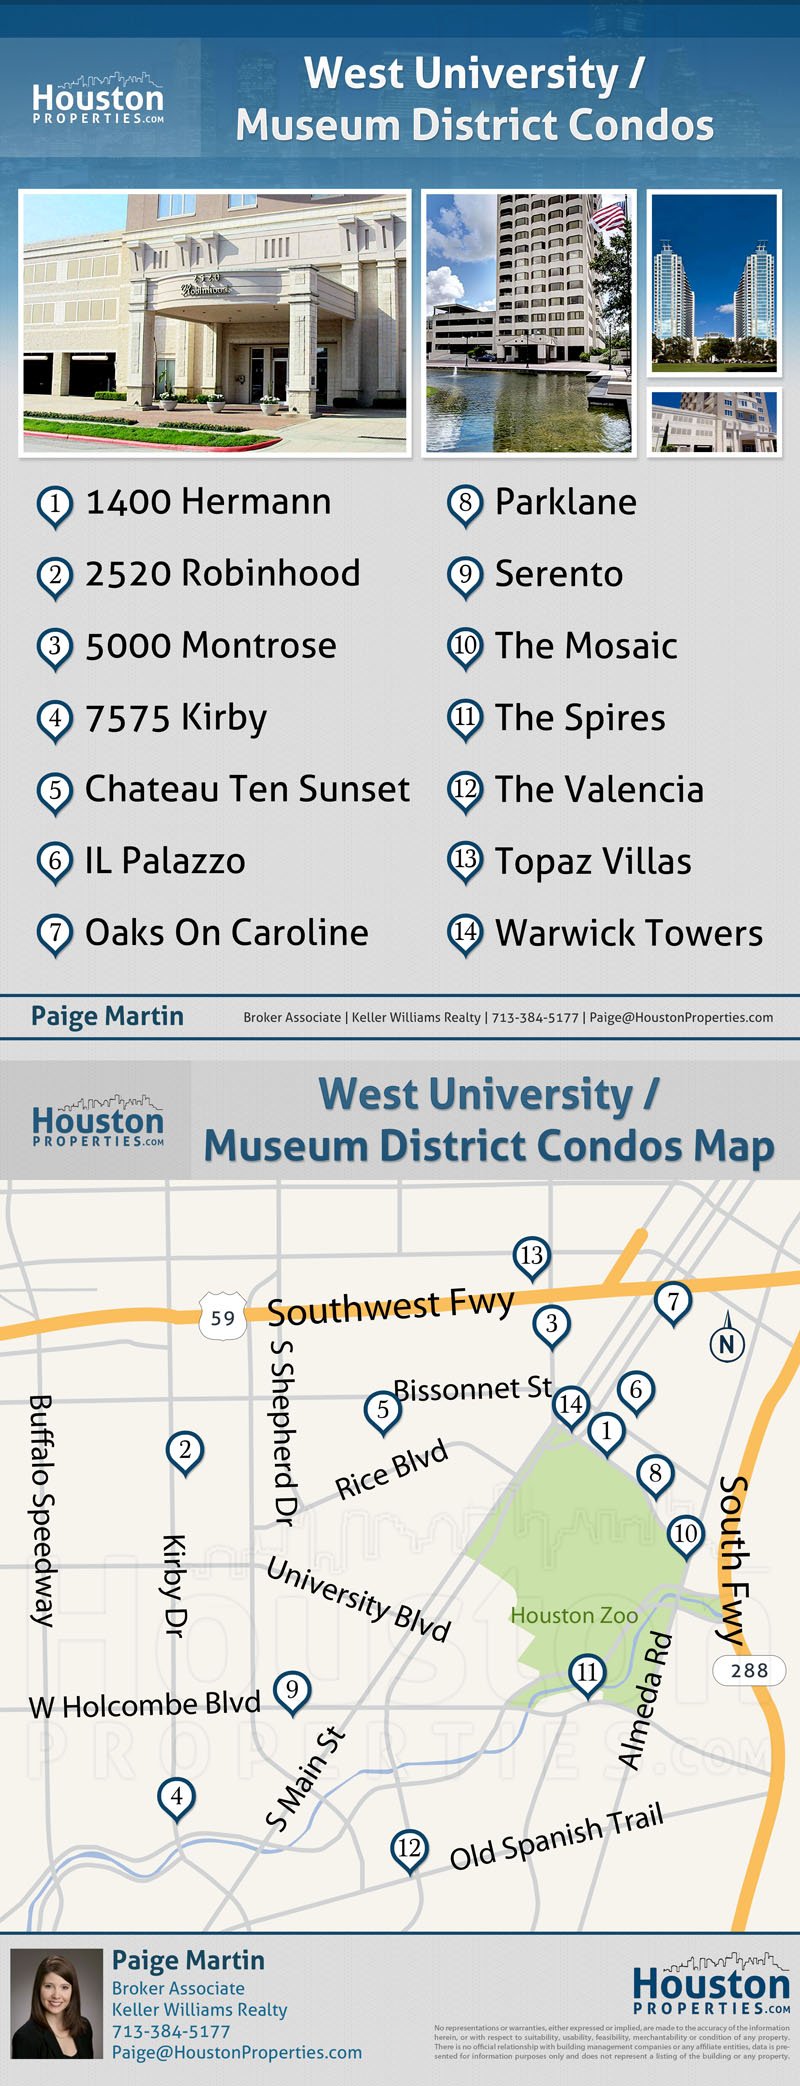 Houston Museum District / West University Condos